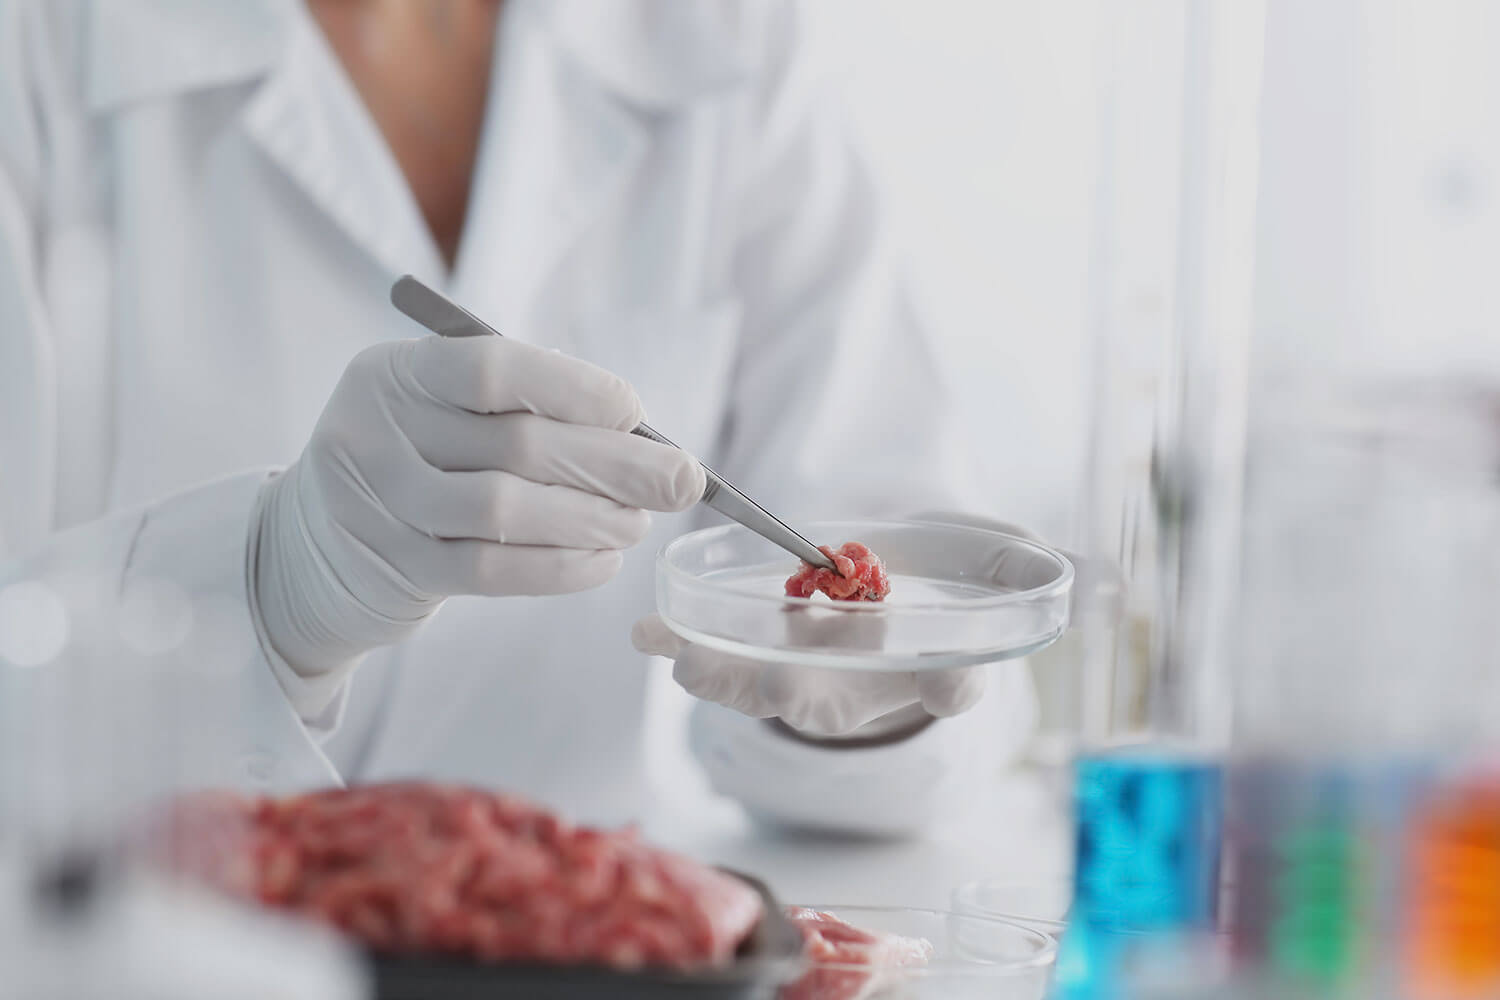 A scientist examines a food sample